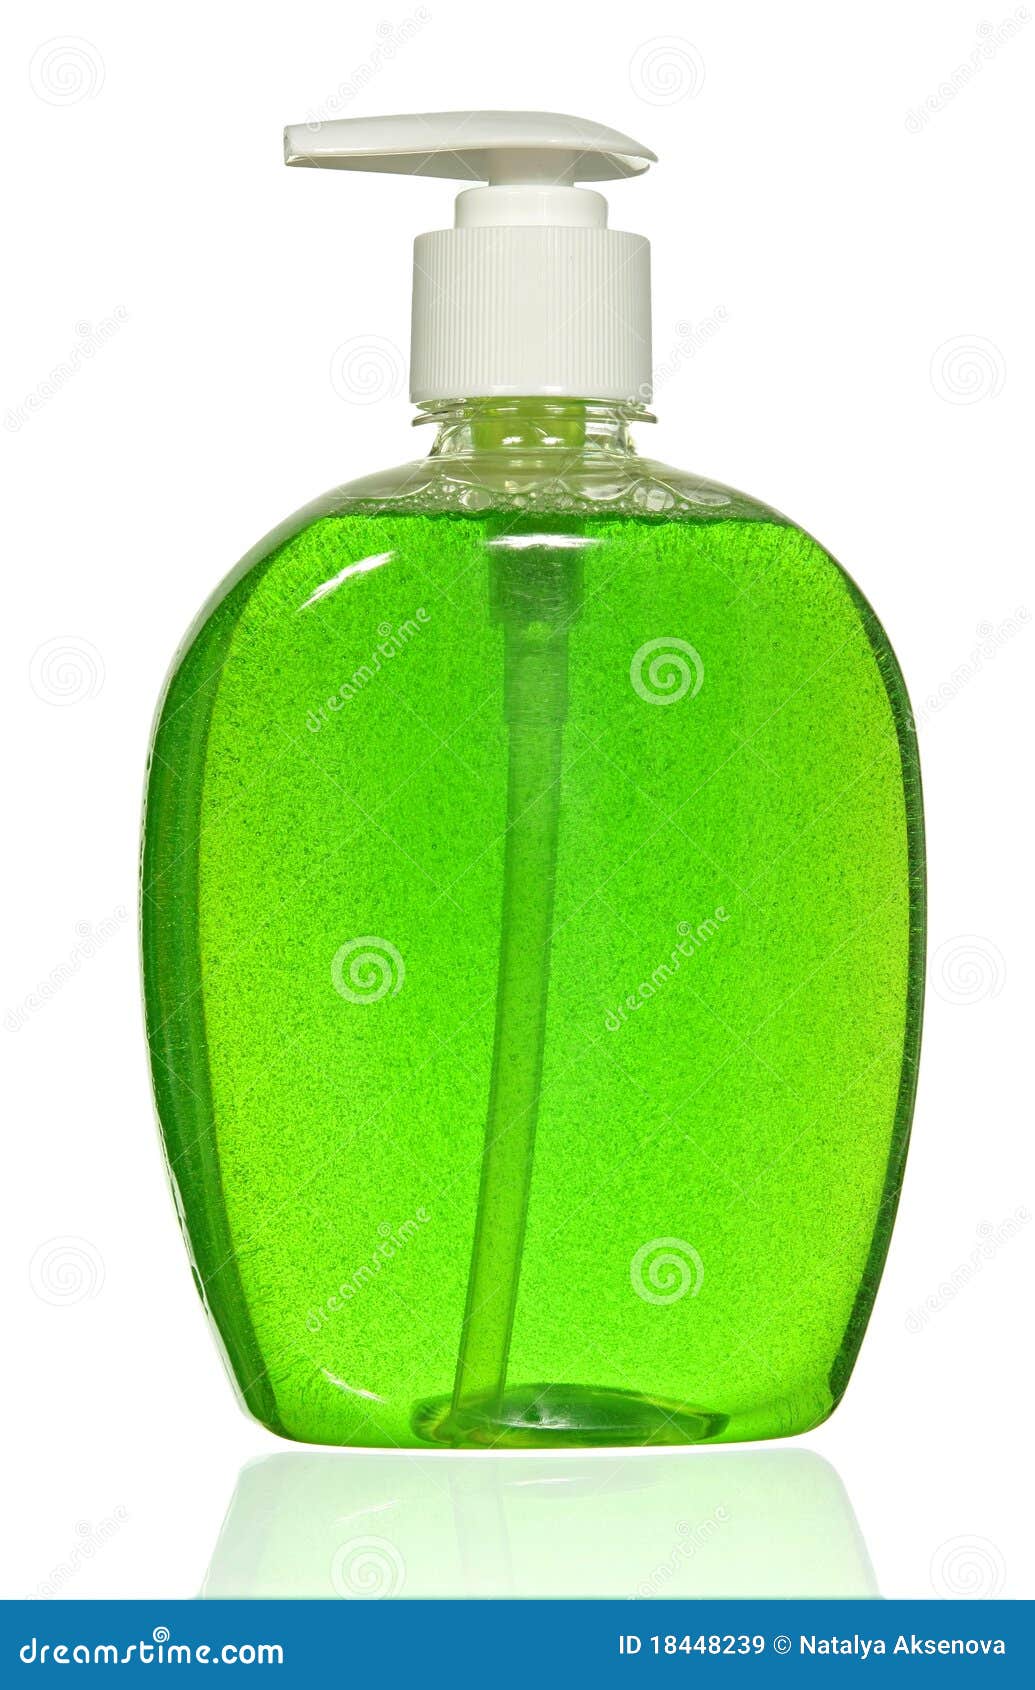 plastic bottle with liquid soap